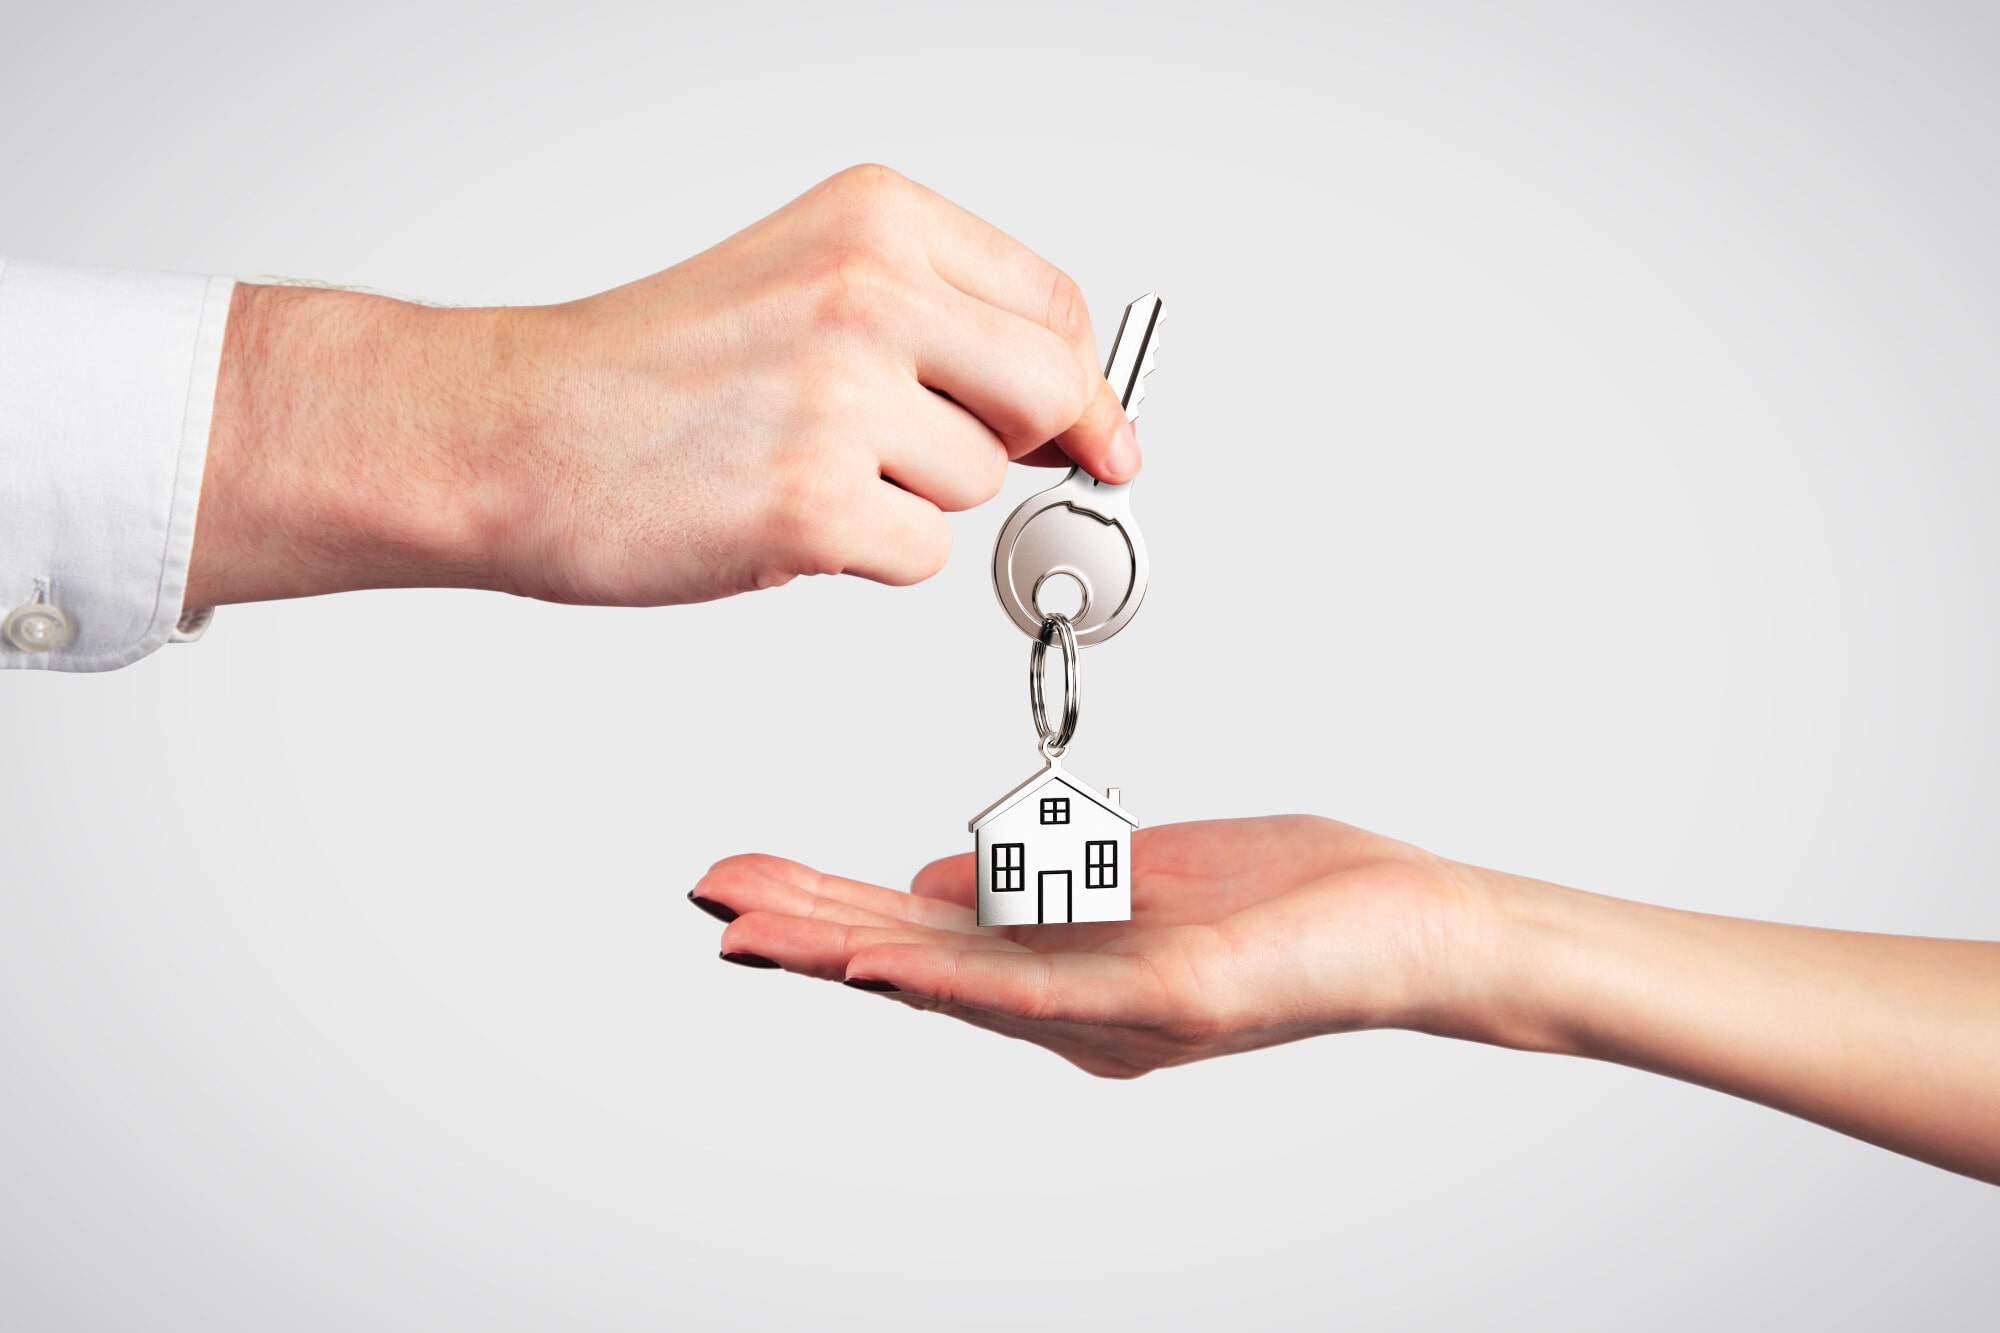 Homes for Rent in Salt Lake City: 3 Tips for Choosing Your Best Option